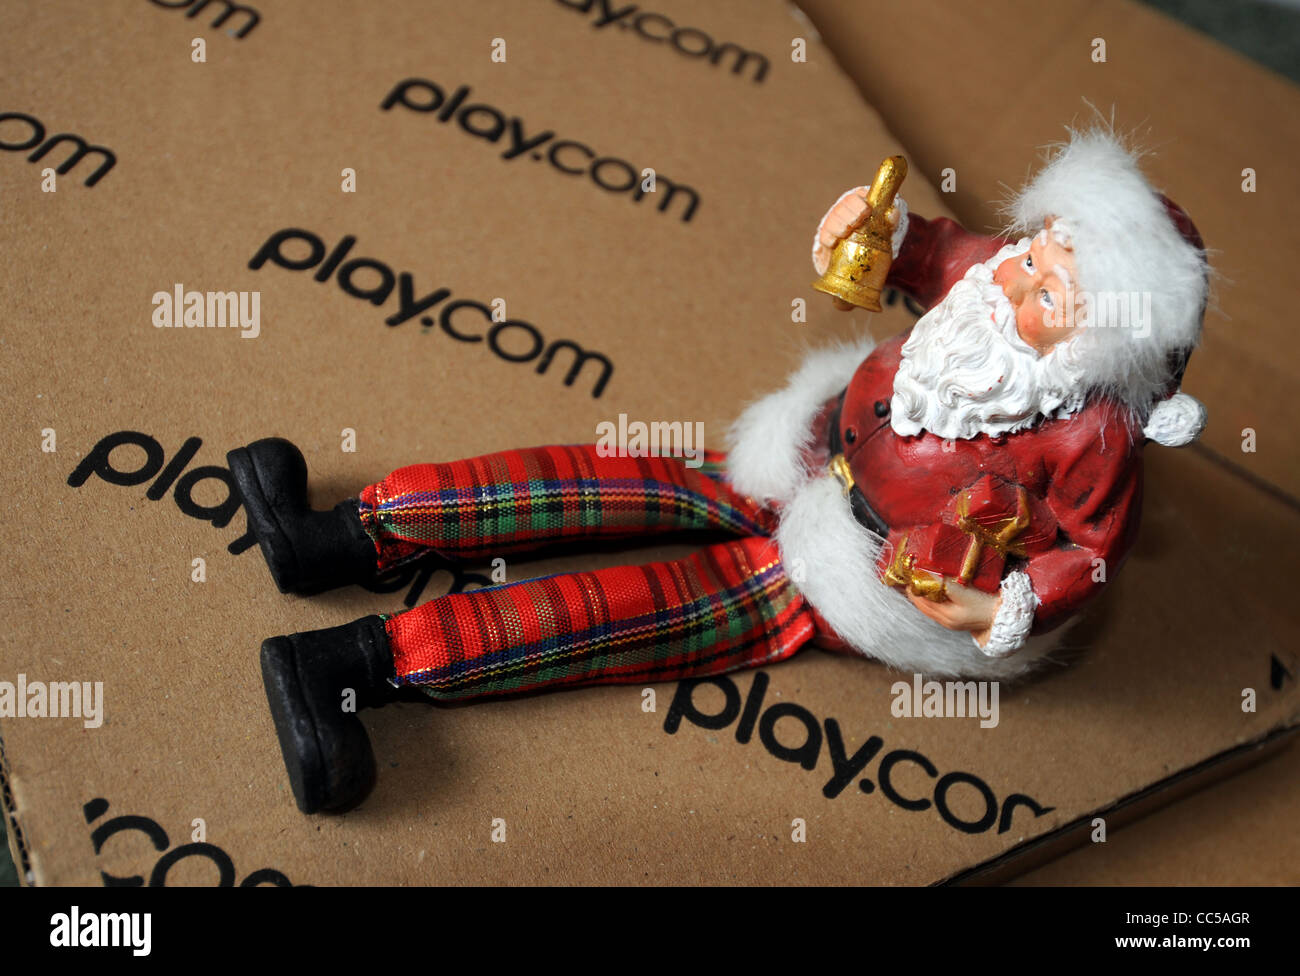 Online shopping at Play.com at Christmas, UK Stock Photo